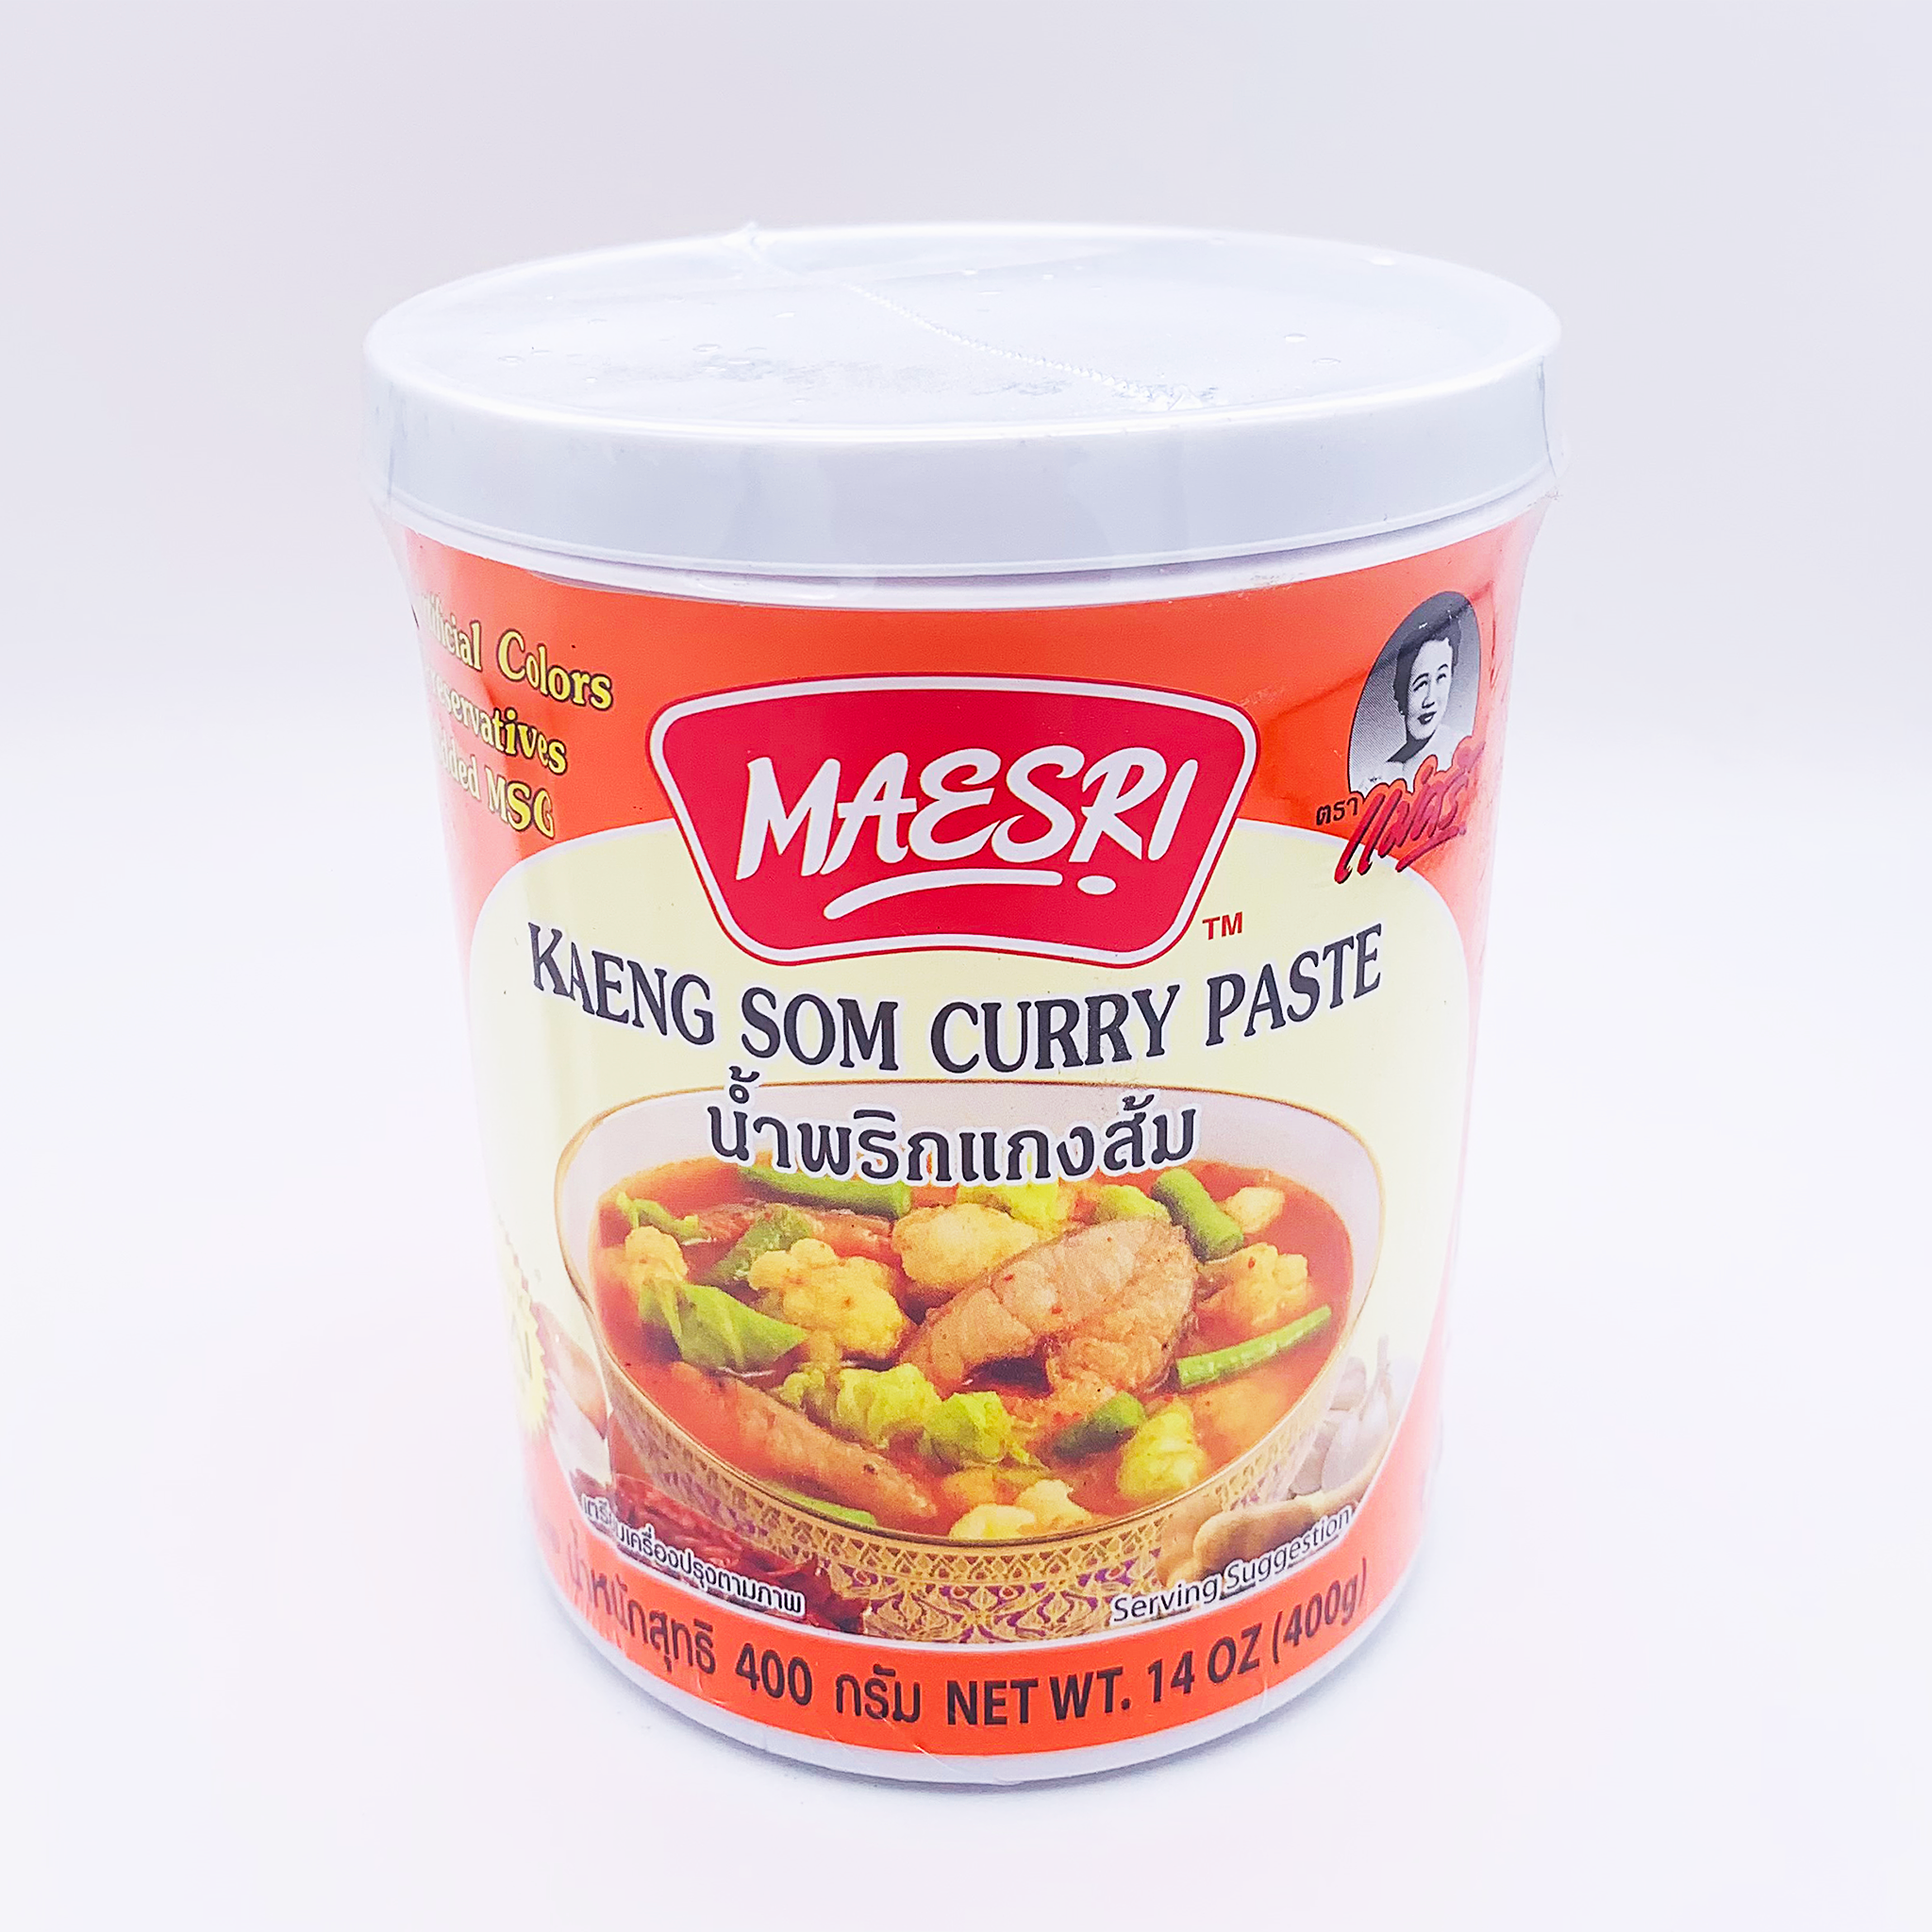 Thai Kaeng Som Sour Curry Paste 400g by Maesri